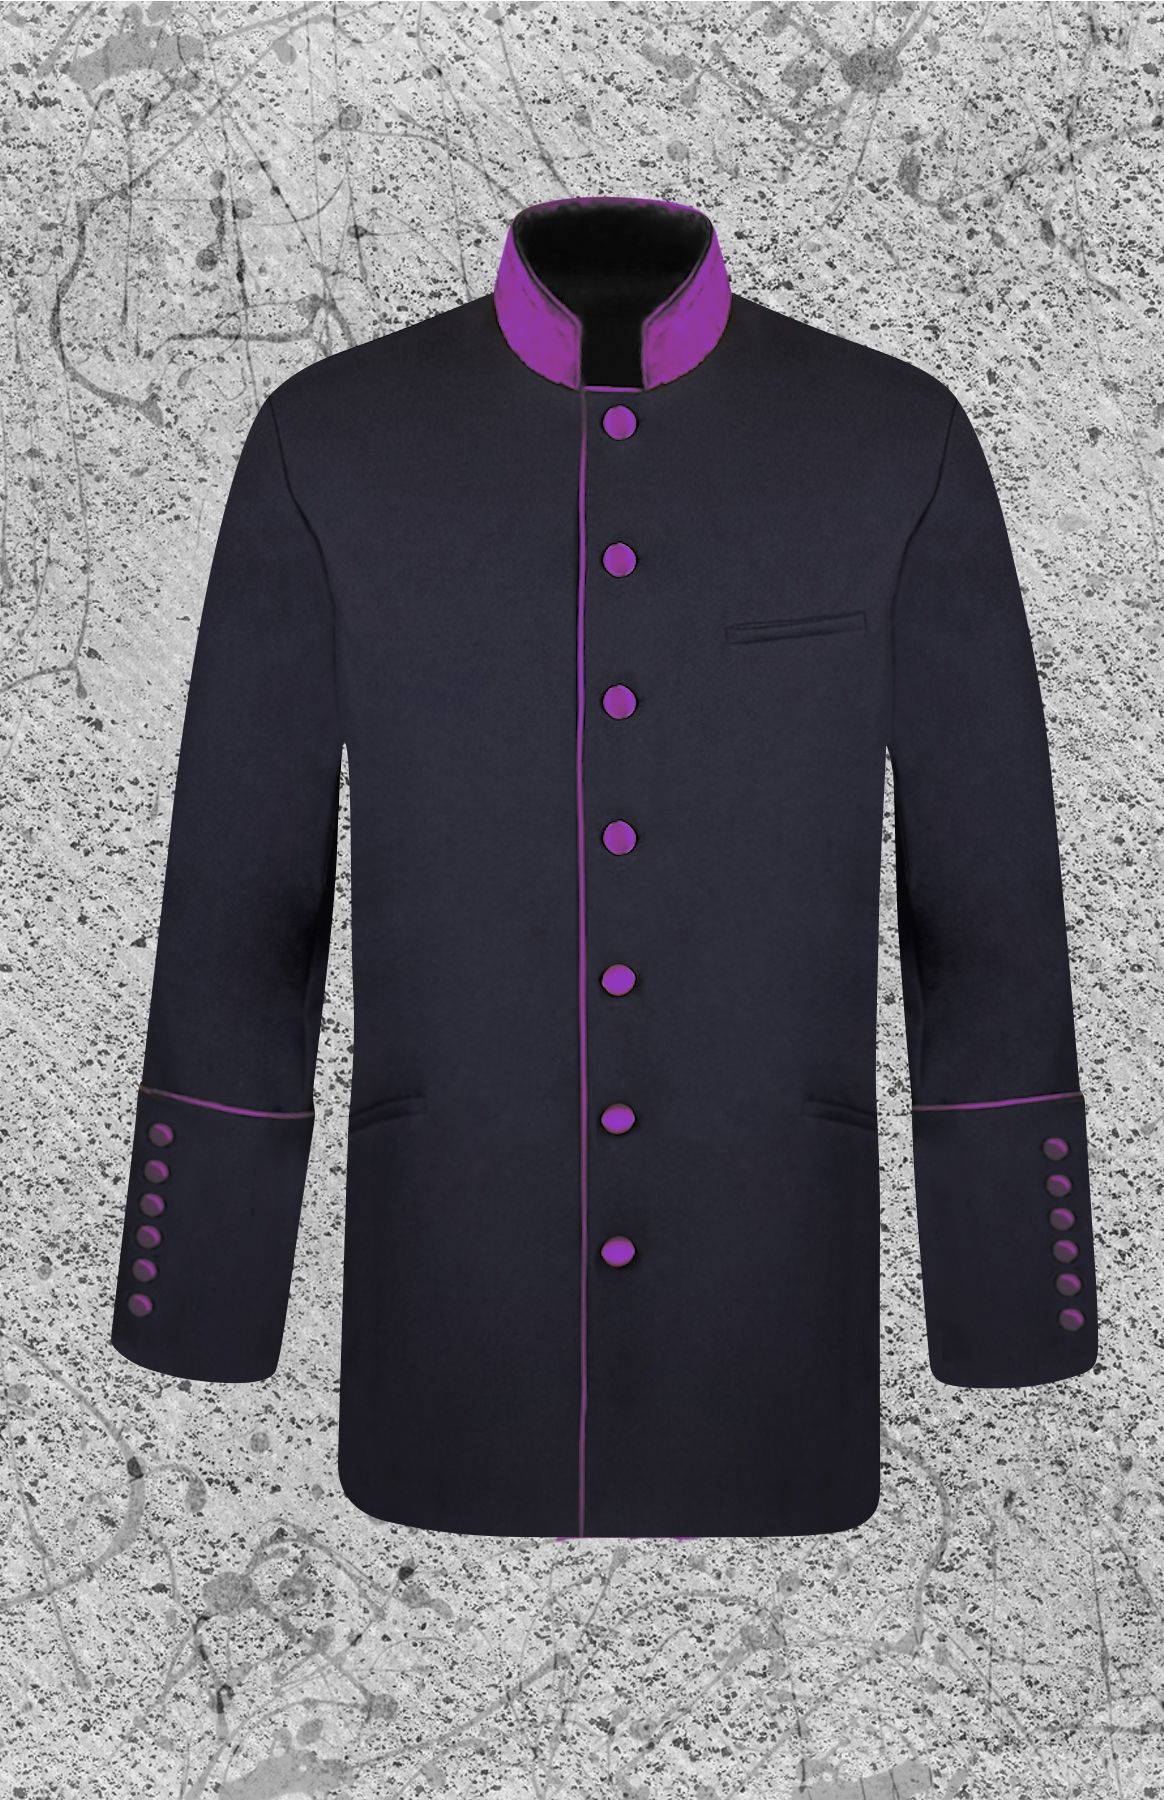 Men's Black and Purple Clergy Jacket